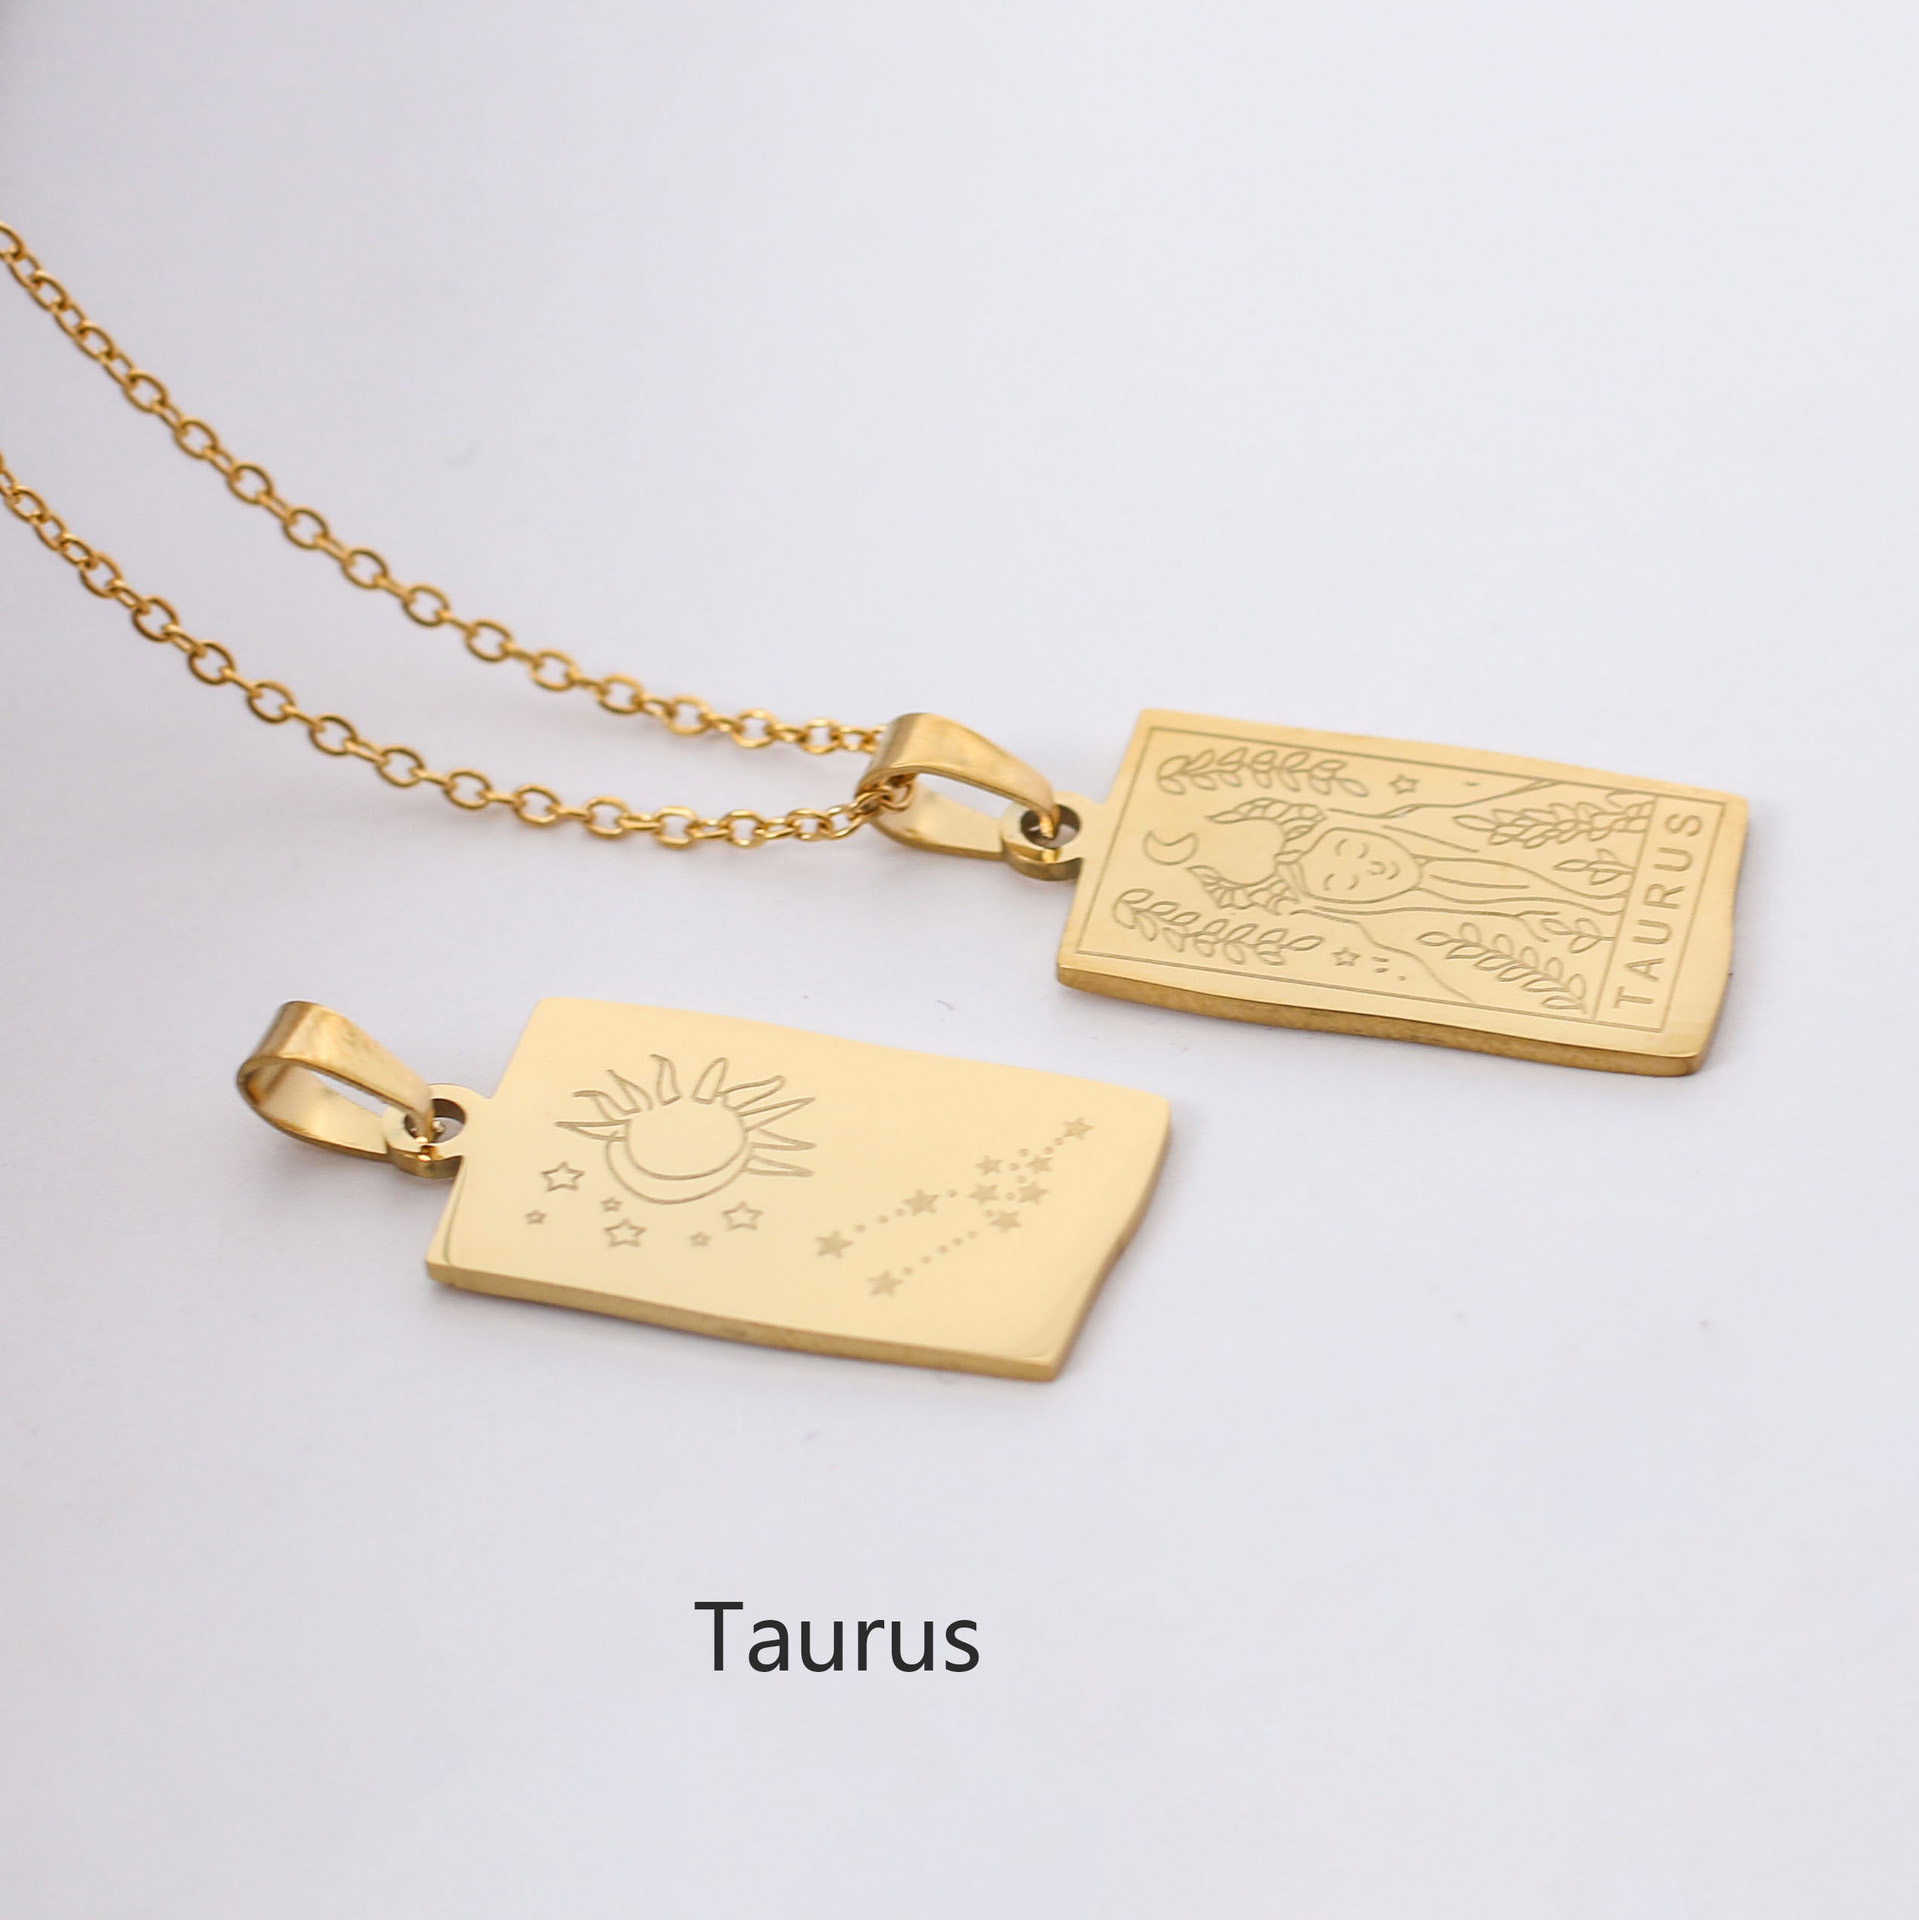 2:Taurus